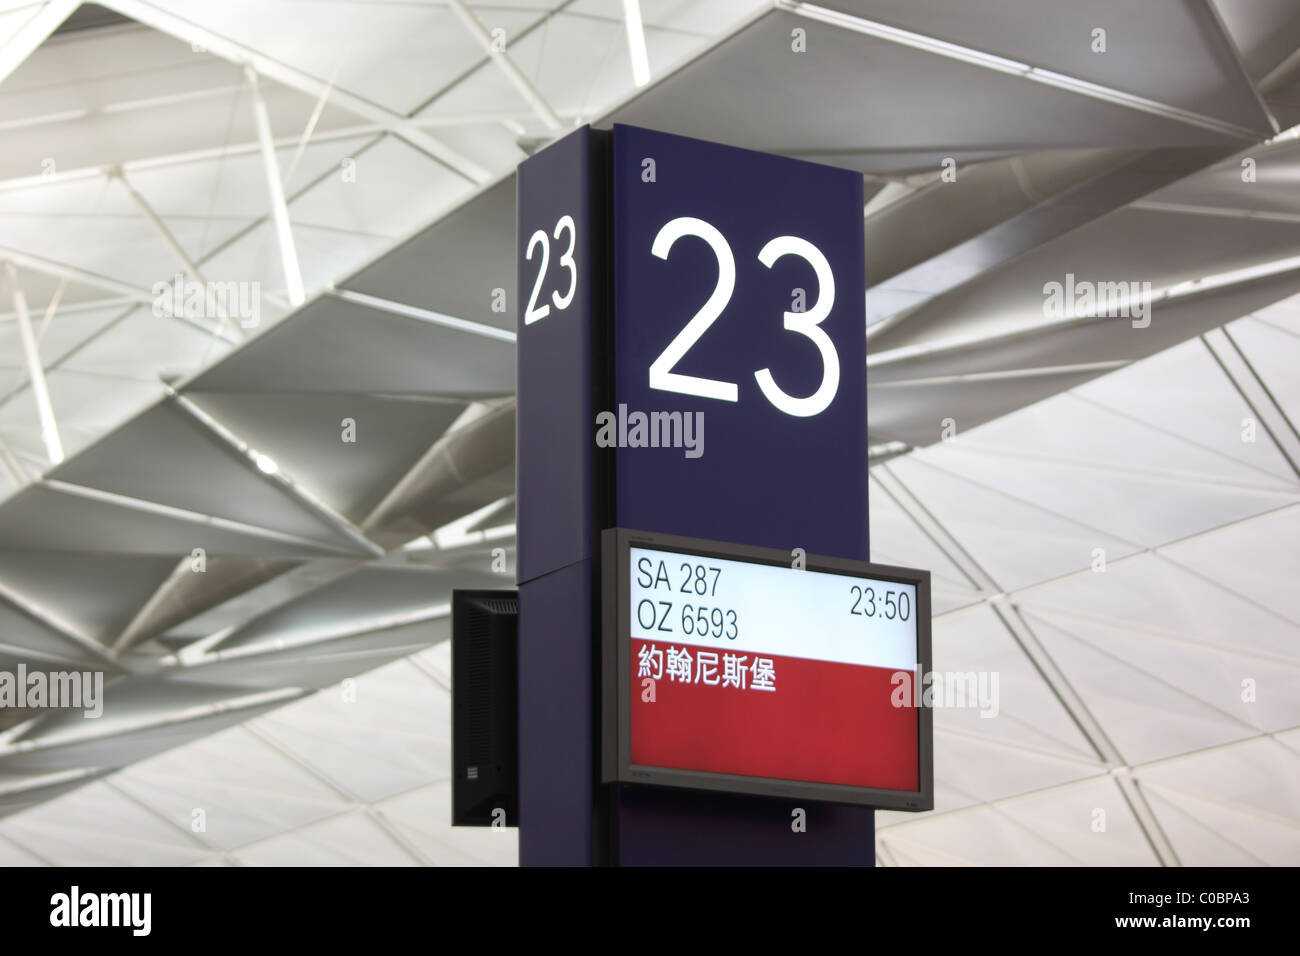 Airport gate 23 in Hong Kong International Airport Stock Photo